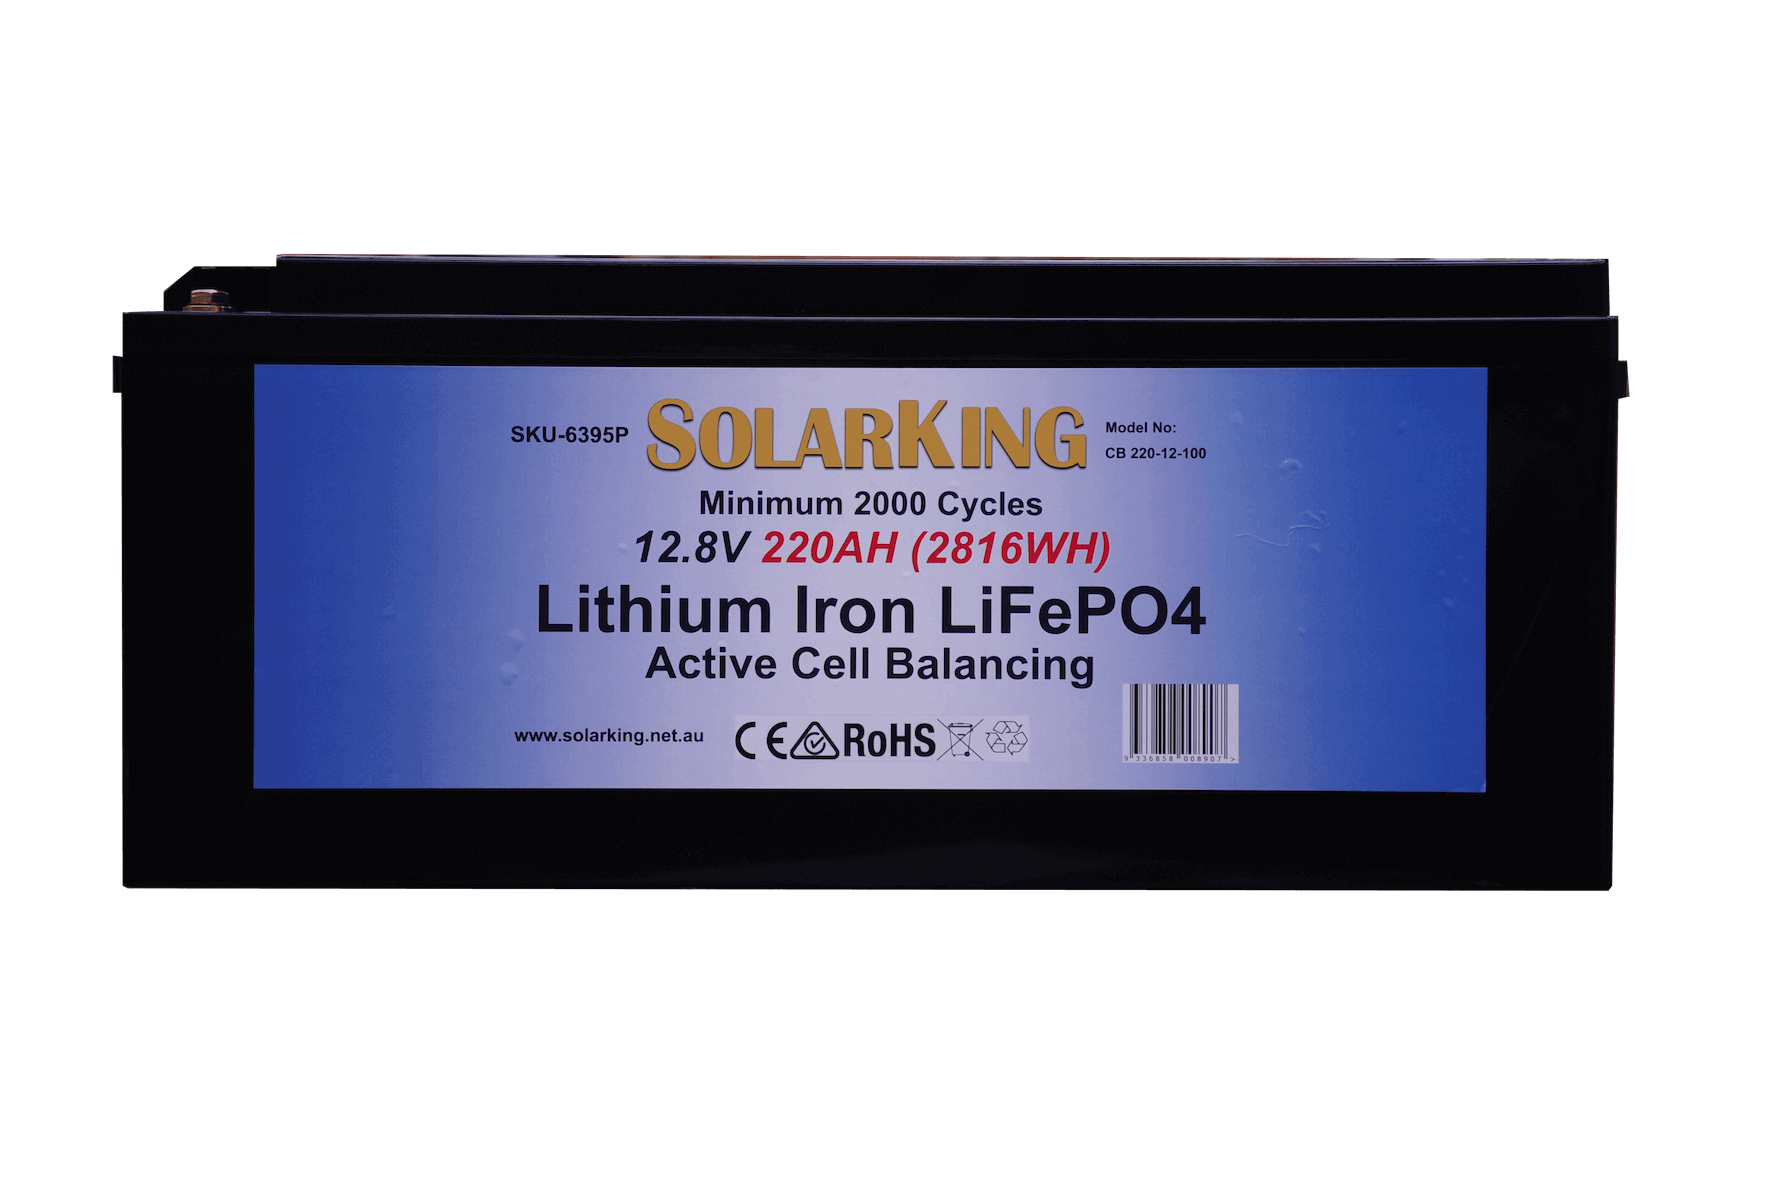 220AH 12.8VDC Lithium Iron SolarKing Battery CB-220-12-100